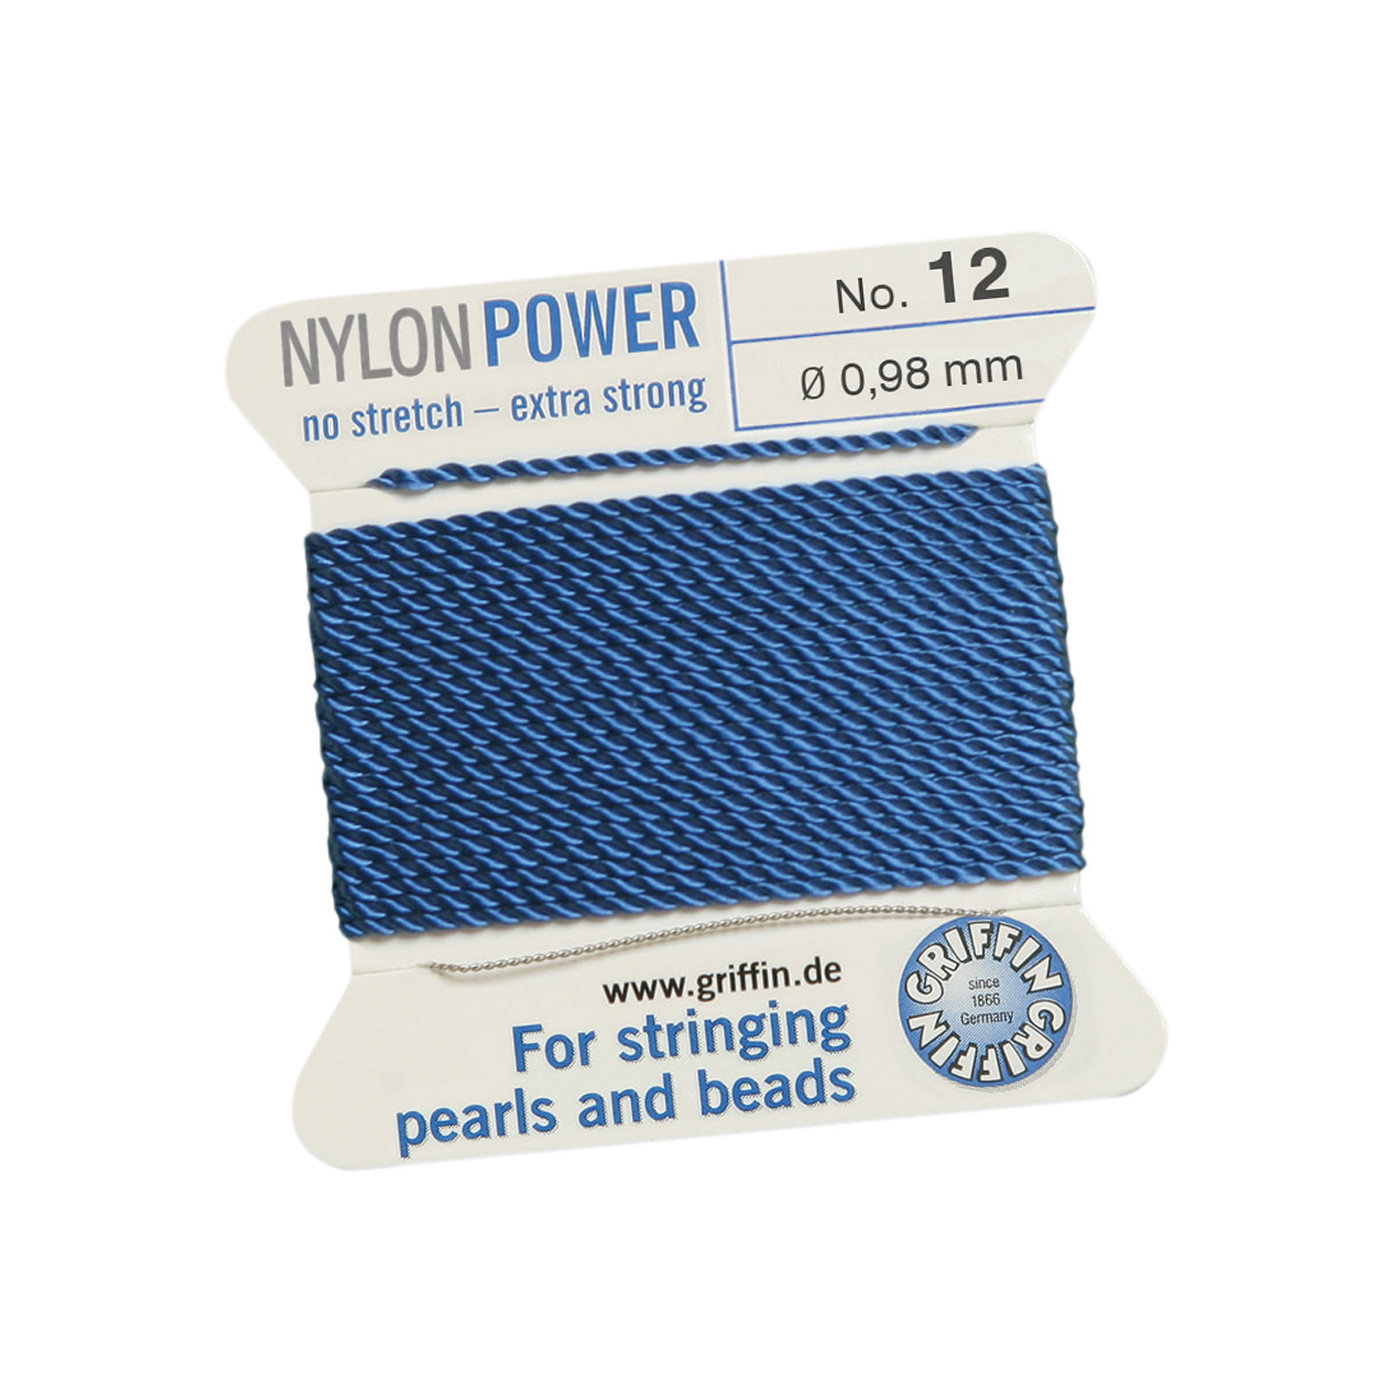 Bead Cord NylonPower, Blue, No. 12 - 2 m